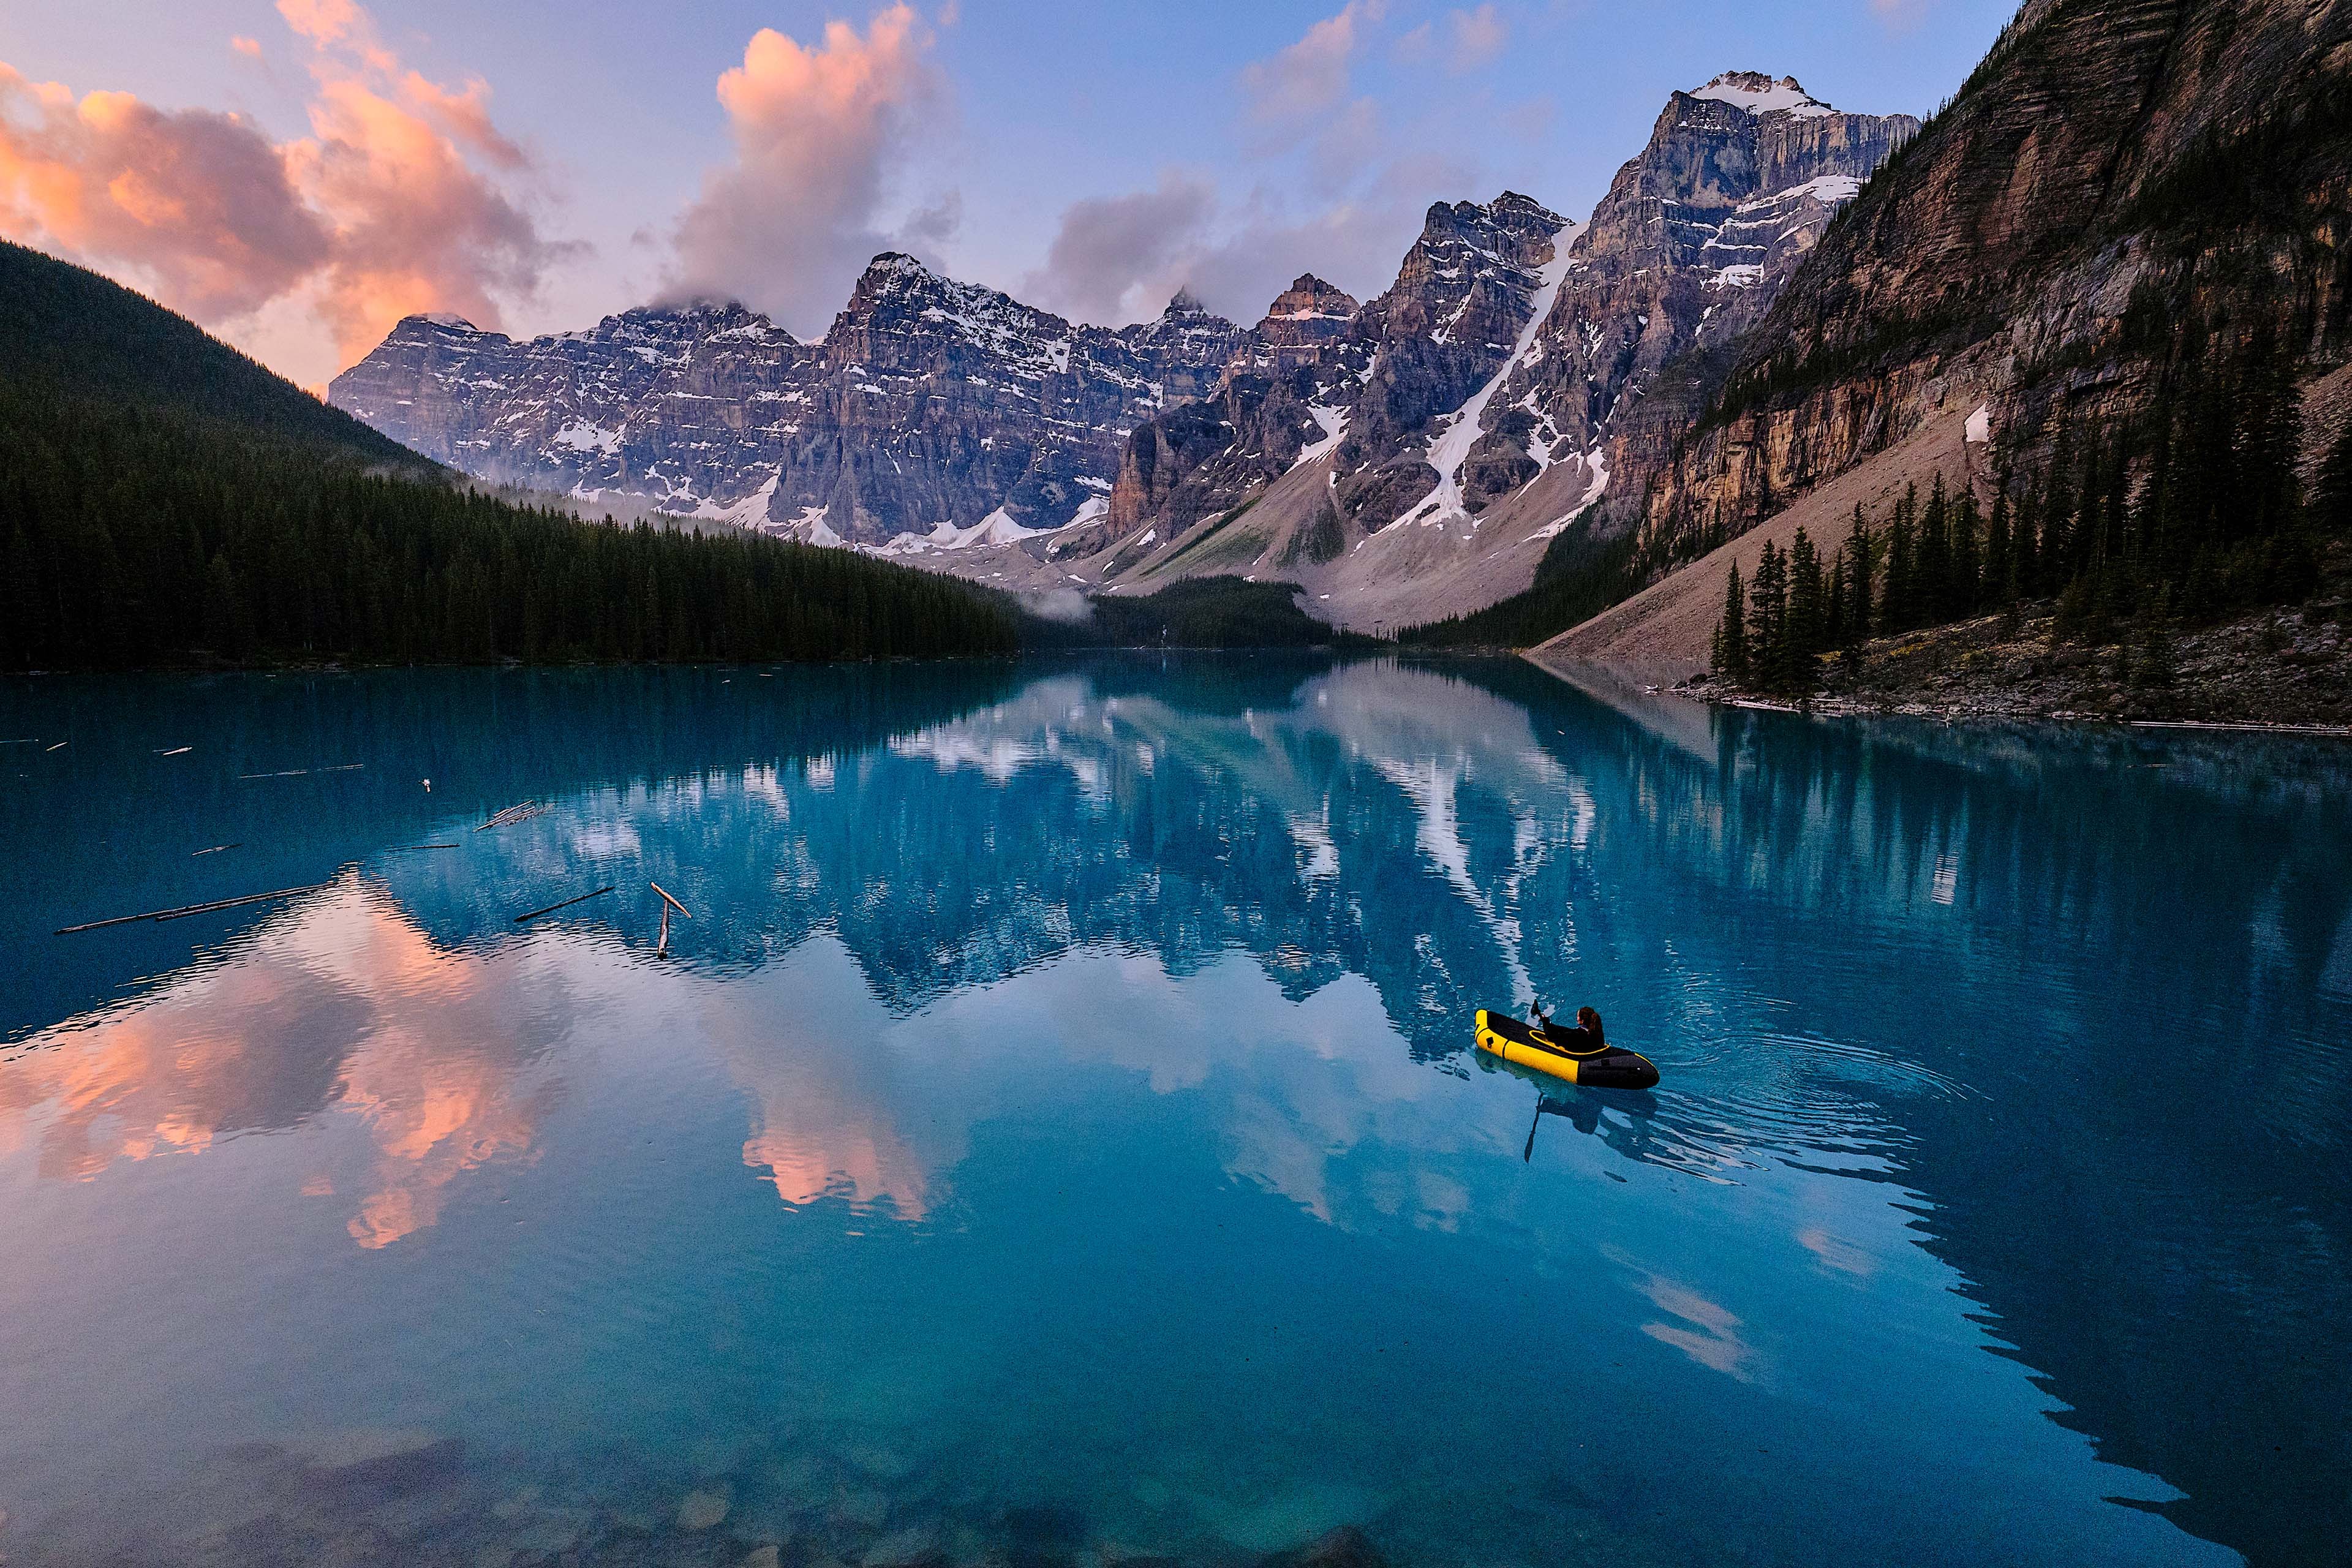 ey-young-woman-kayaks-across-mountain-lake-at-sunrise.jpg.rendition.3840.2560